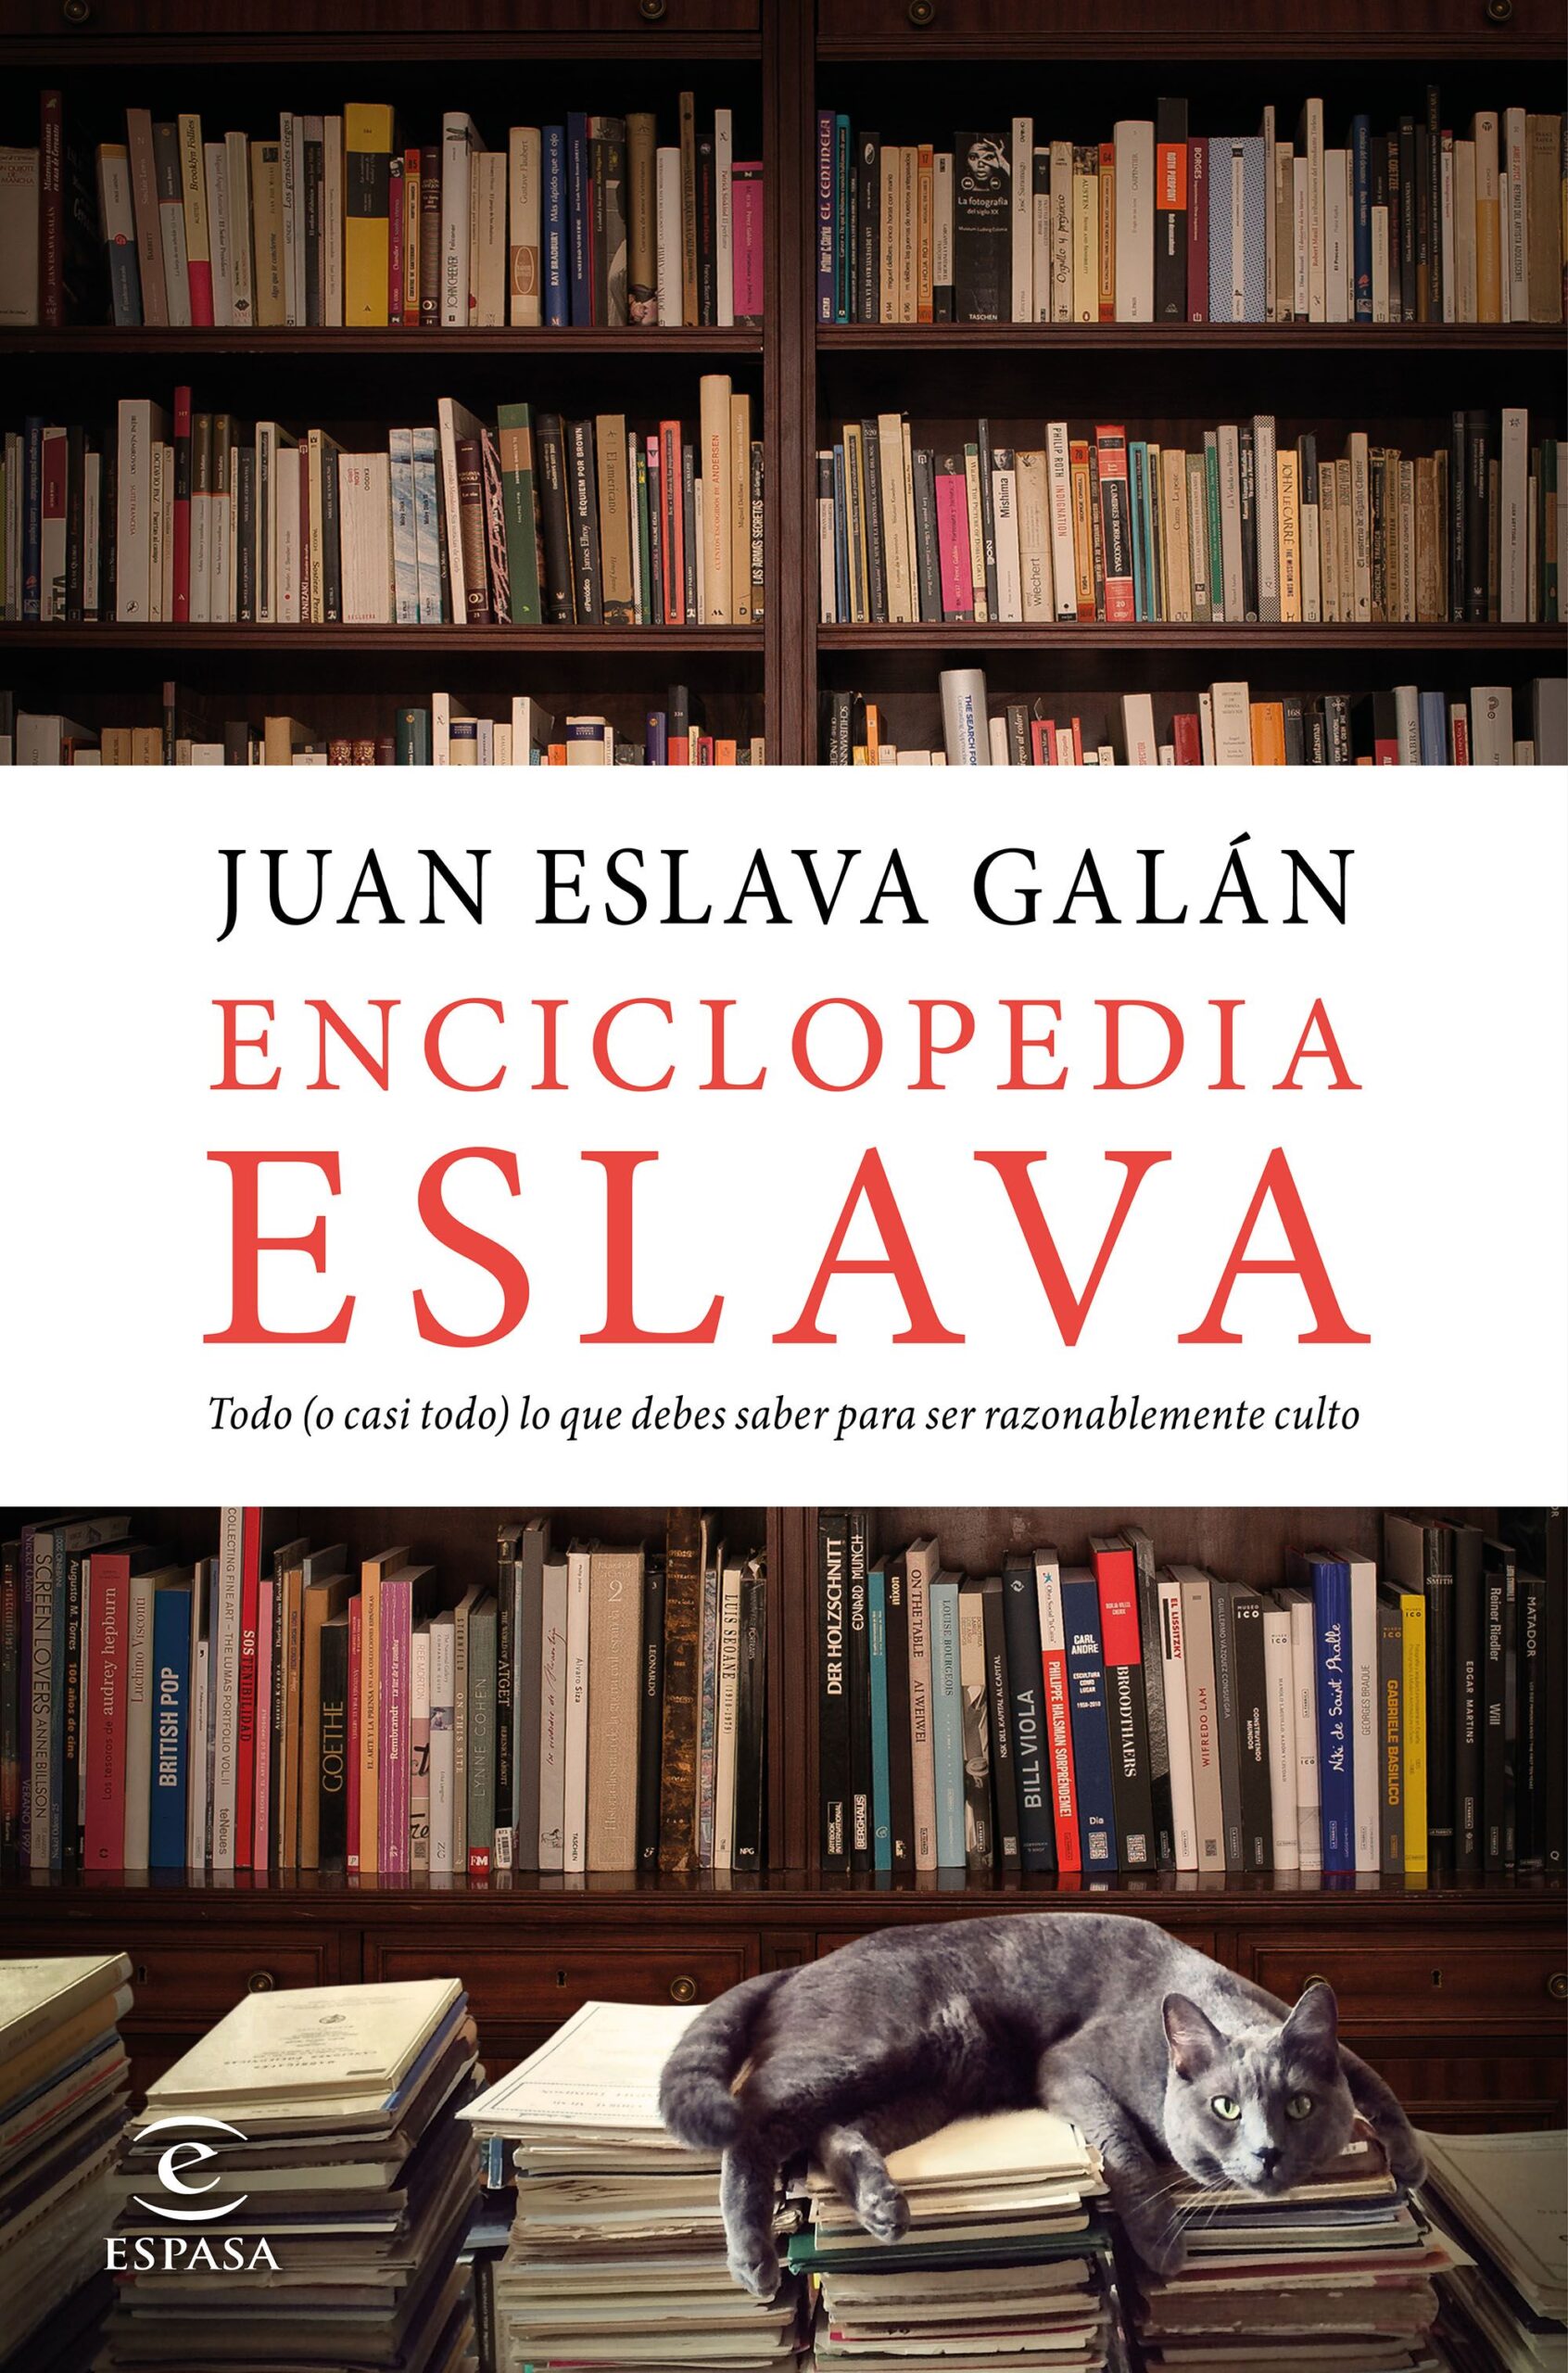 Juan Eslava Galán - Enciclopedia Eslava